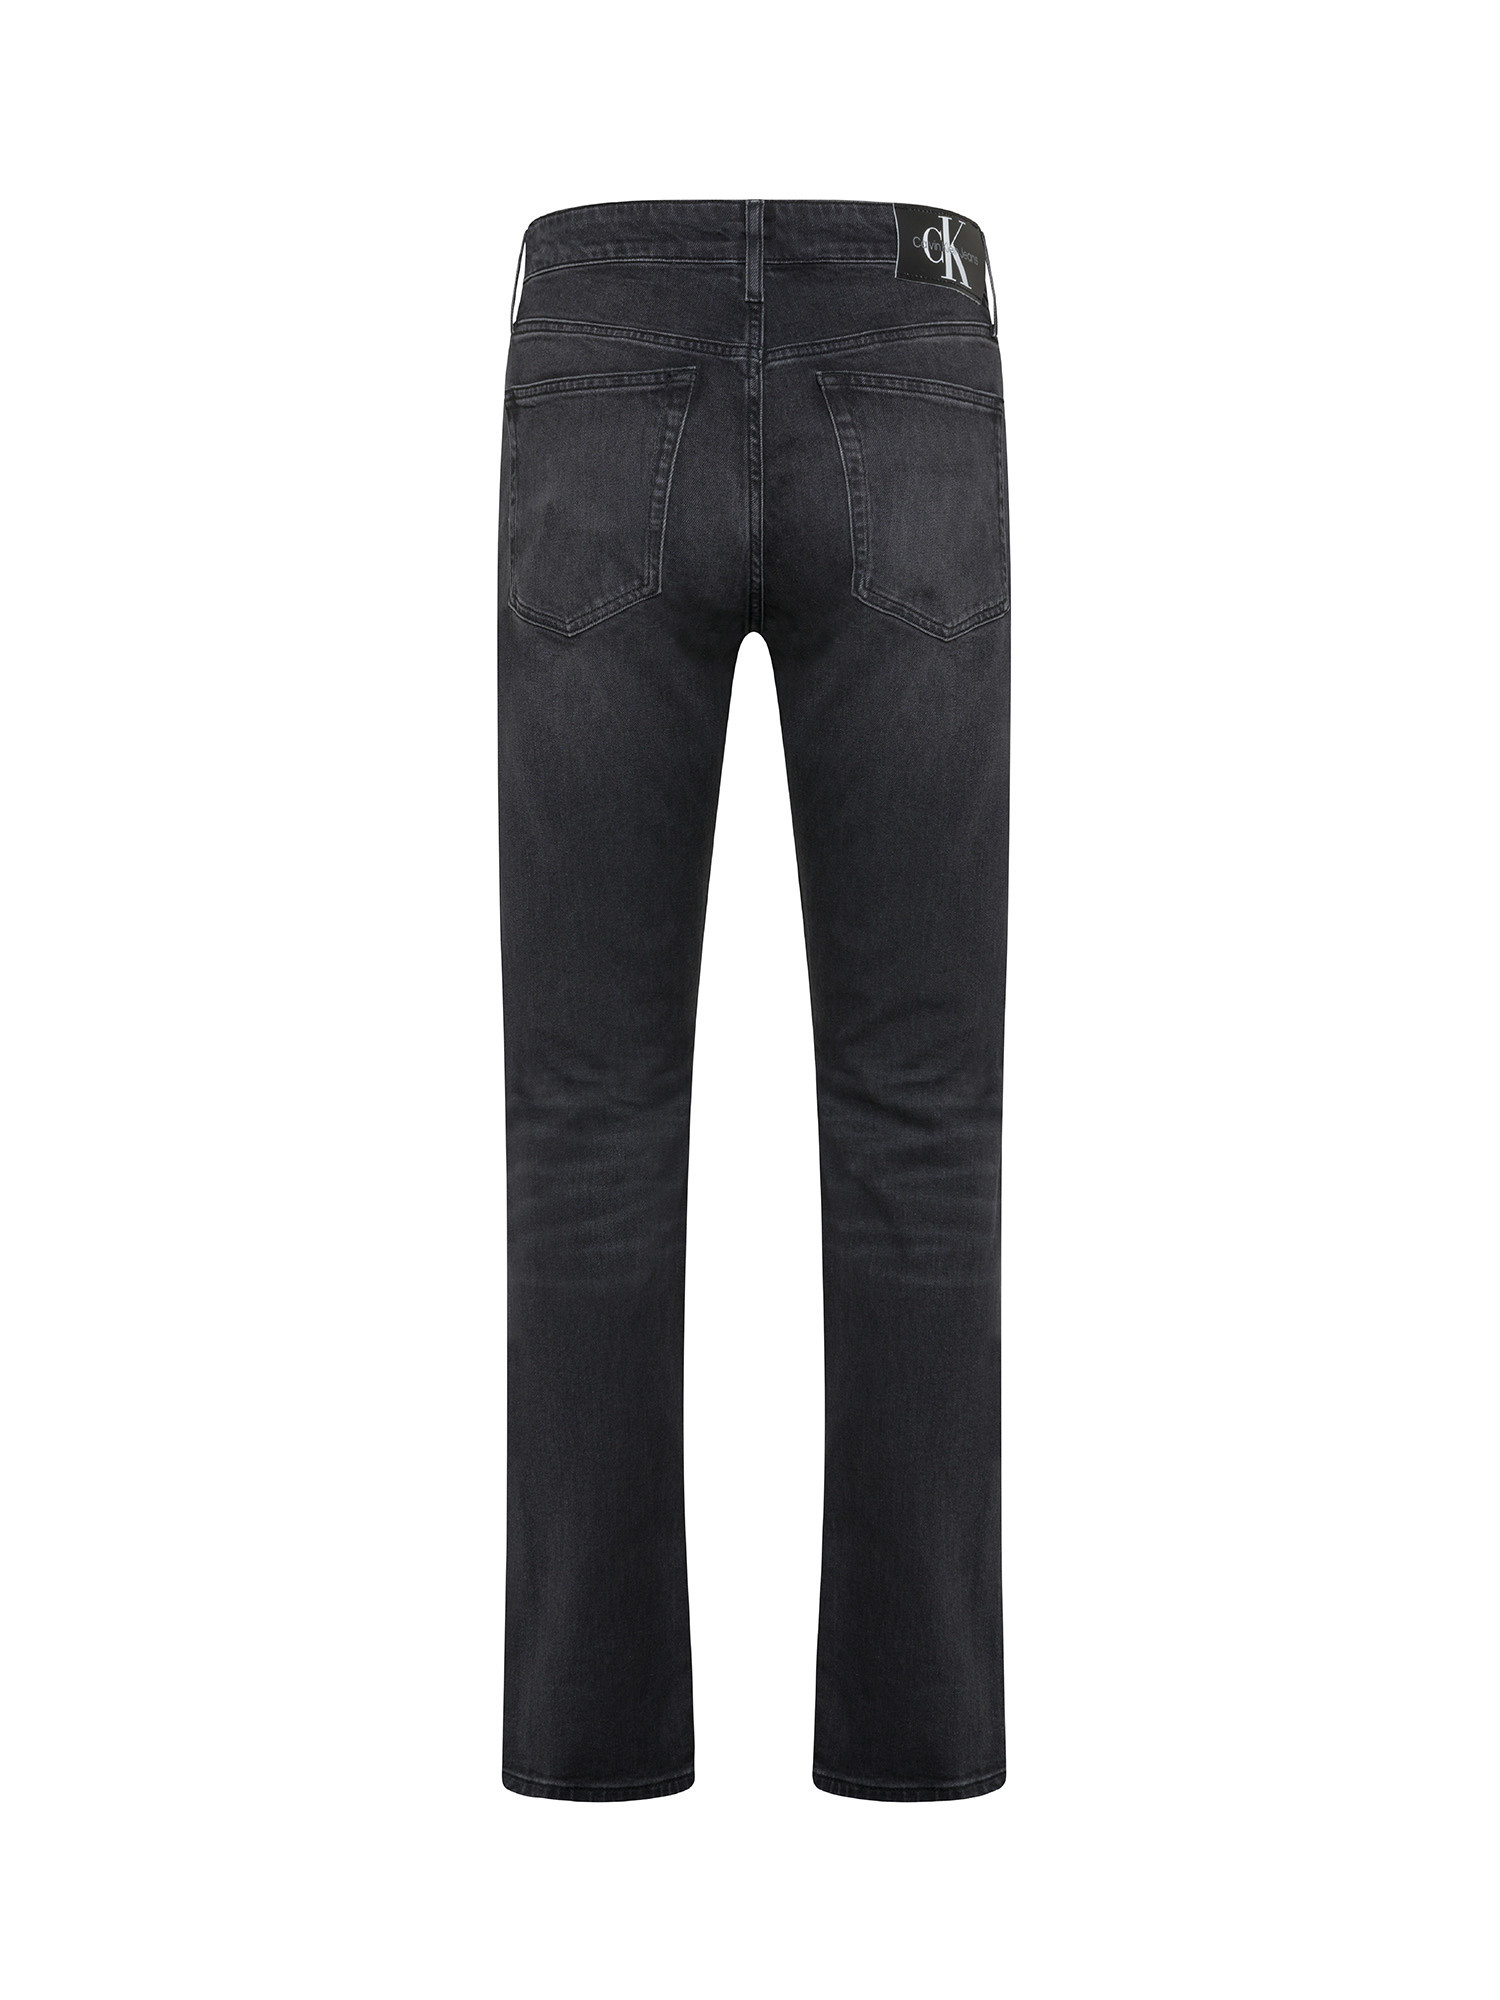 Calvin Klein Jeans - Slim tapered jeans, Black, large image number 1